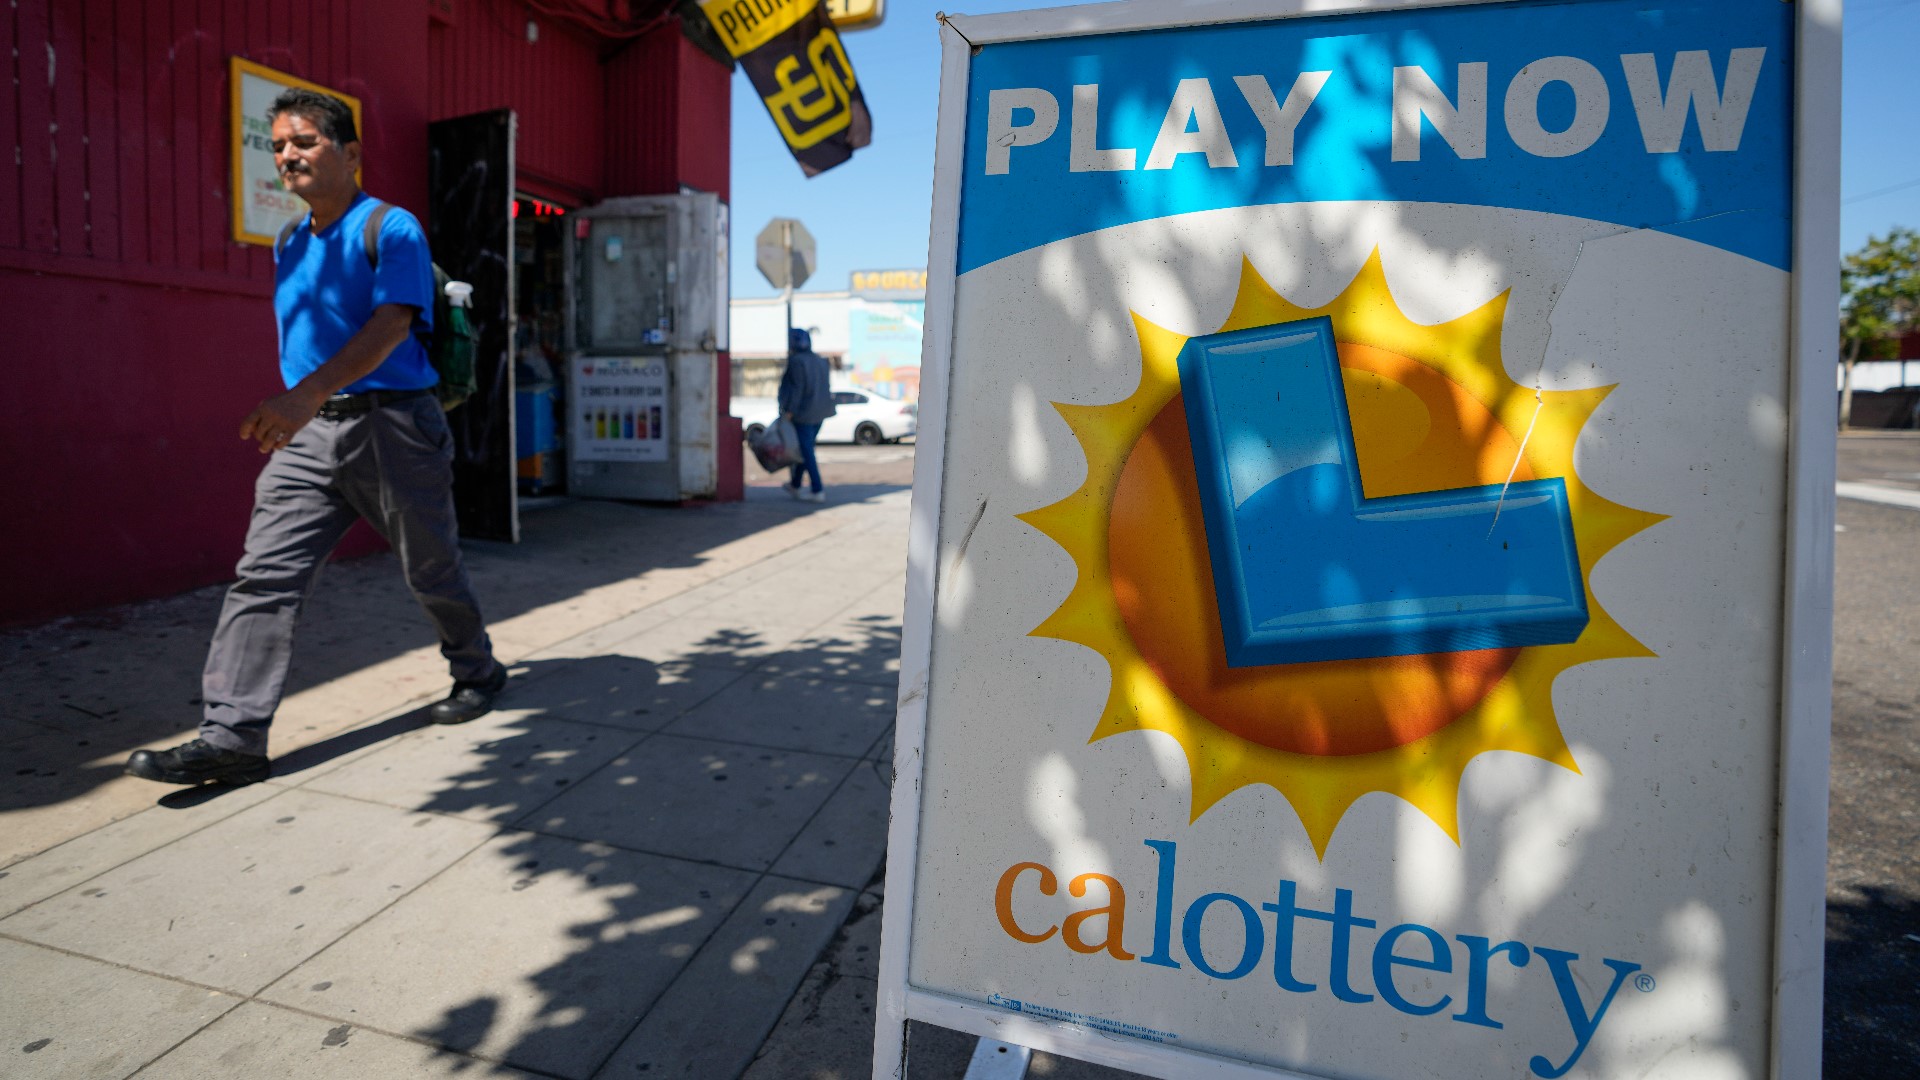 Winning ticket in $1 billion Powerball jackpot sold in California